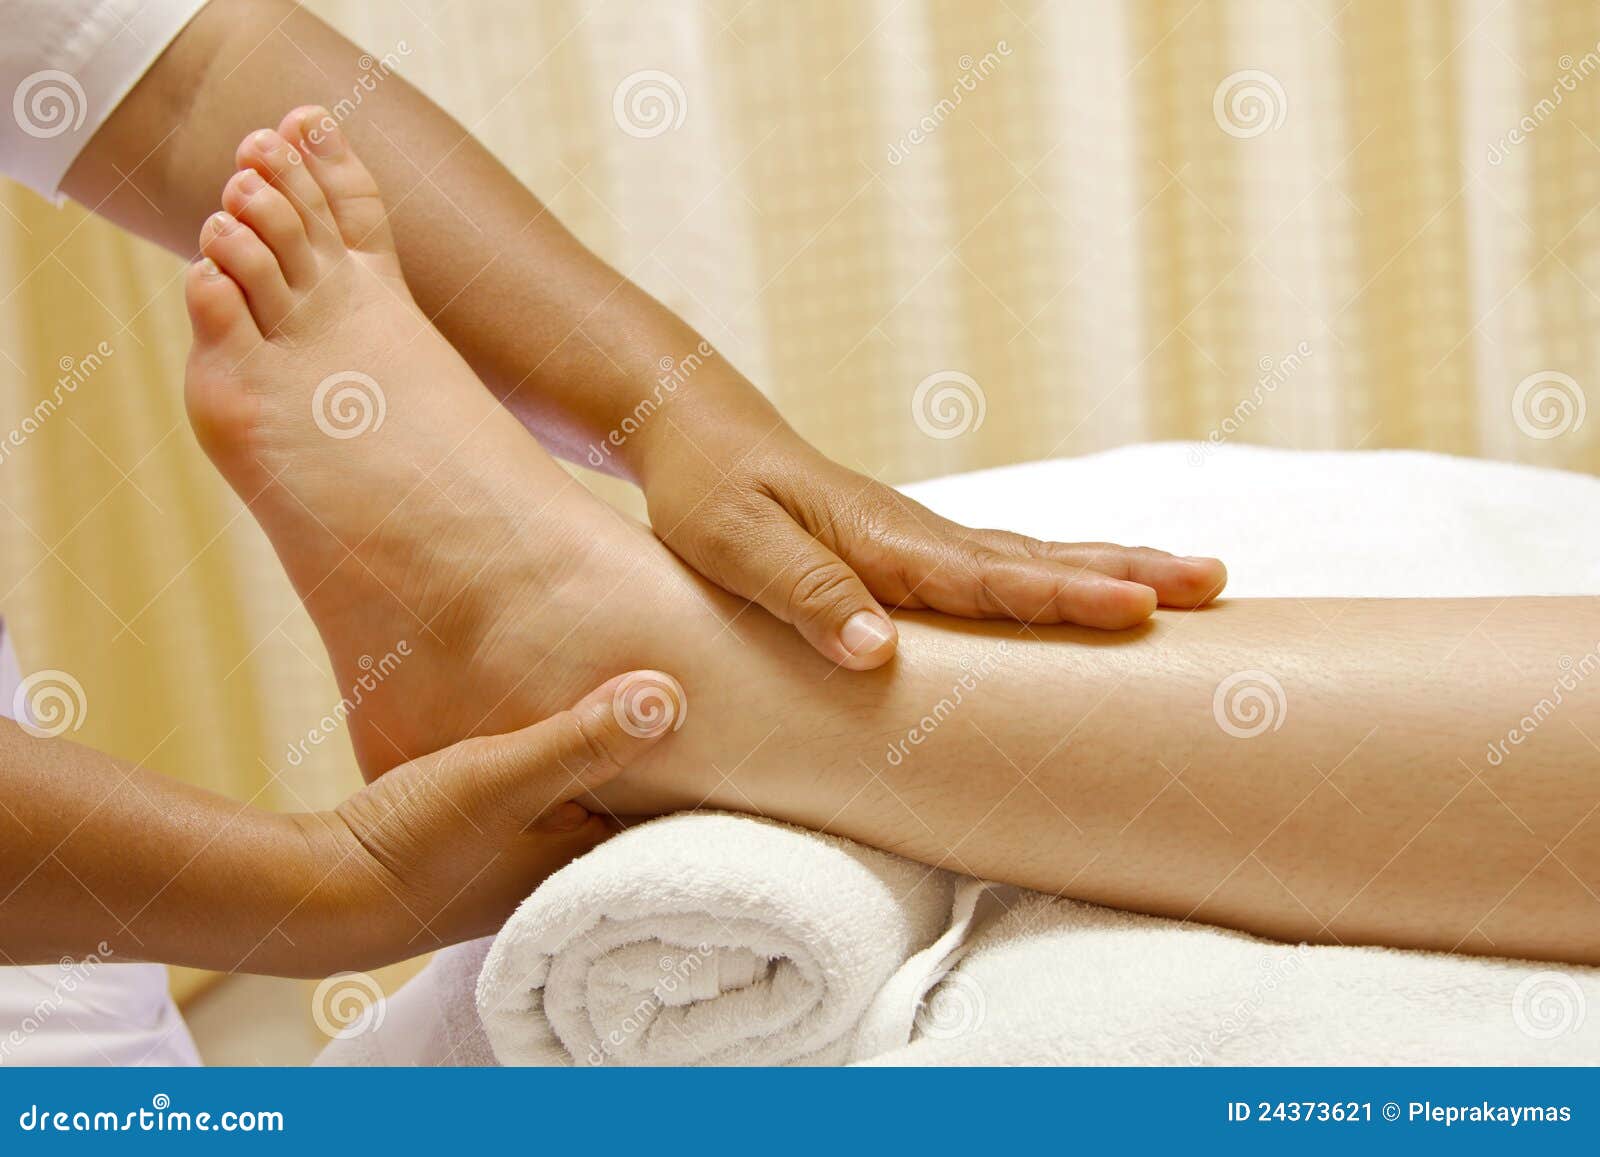 Foot Massage Spa Foot Oil Treatment Stock Image Image O